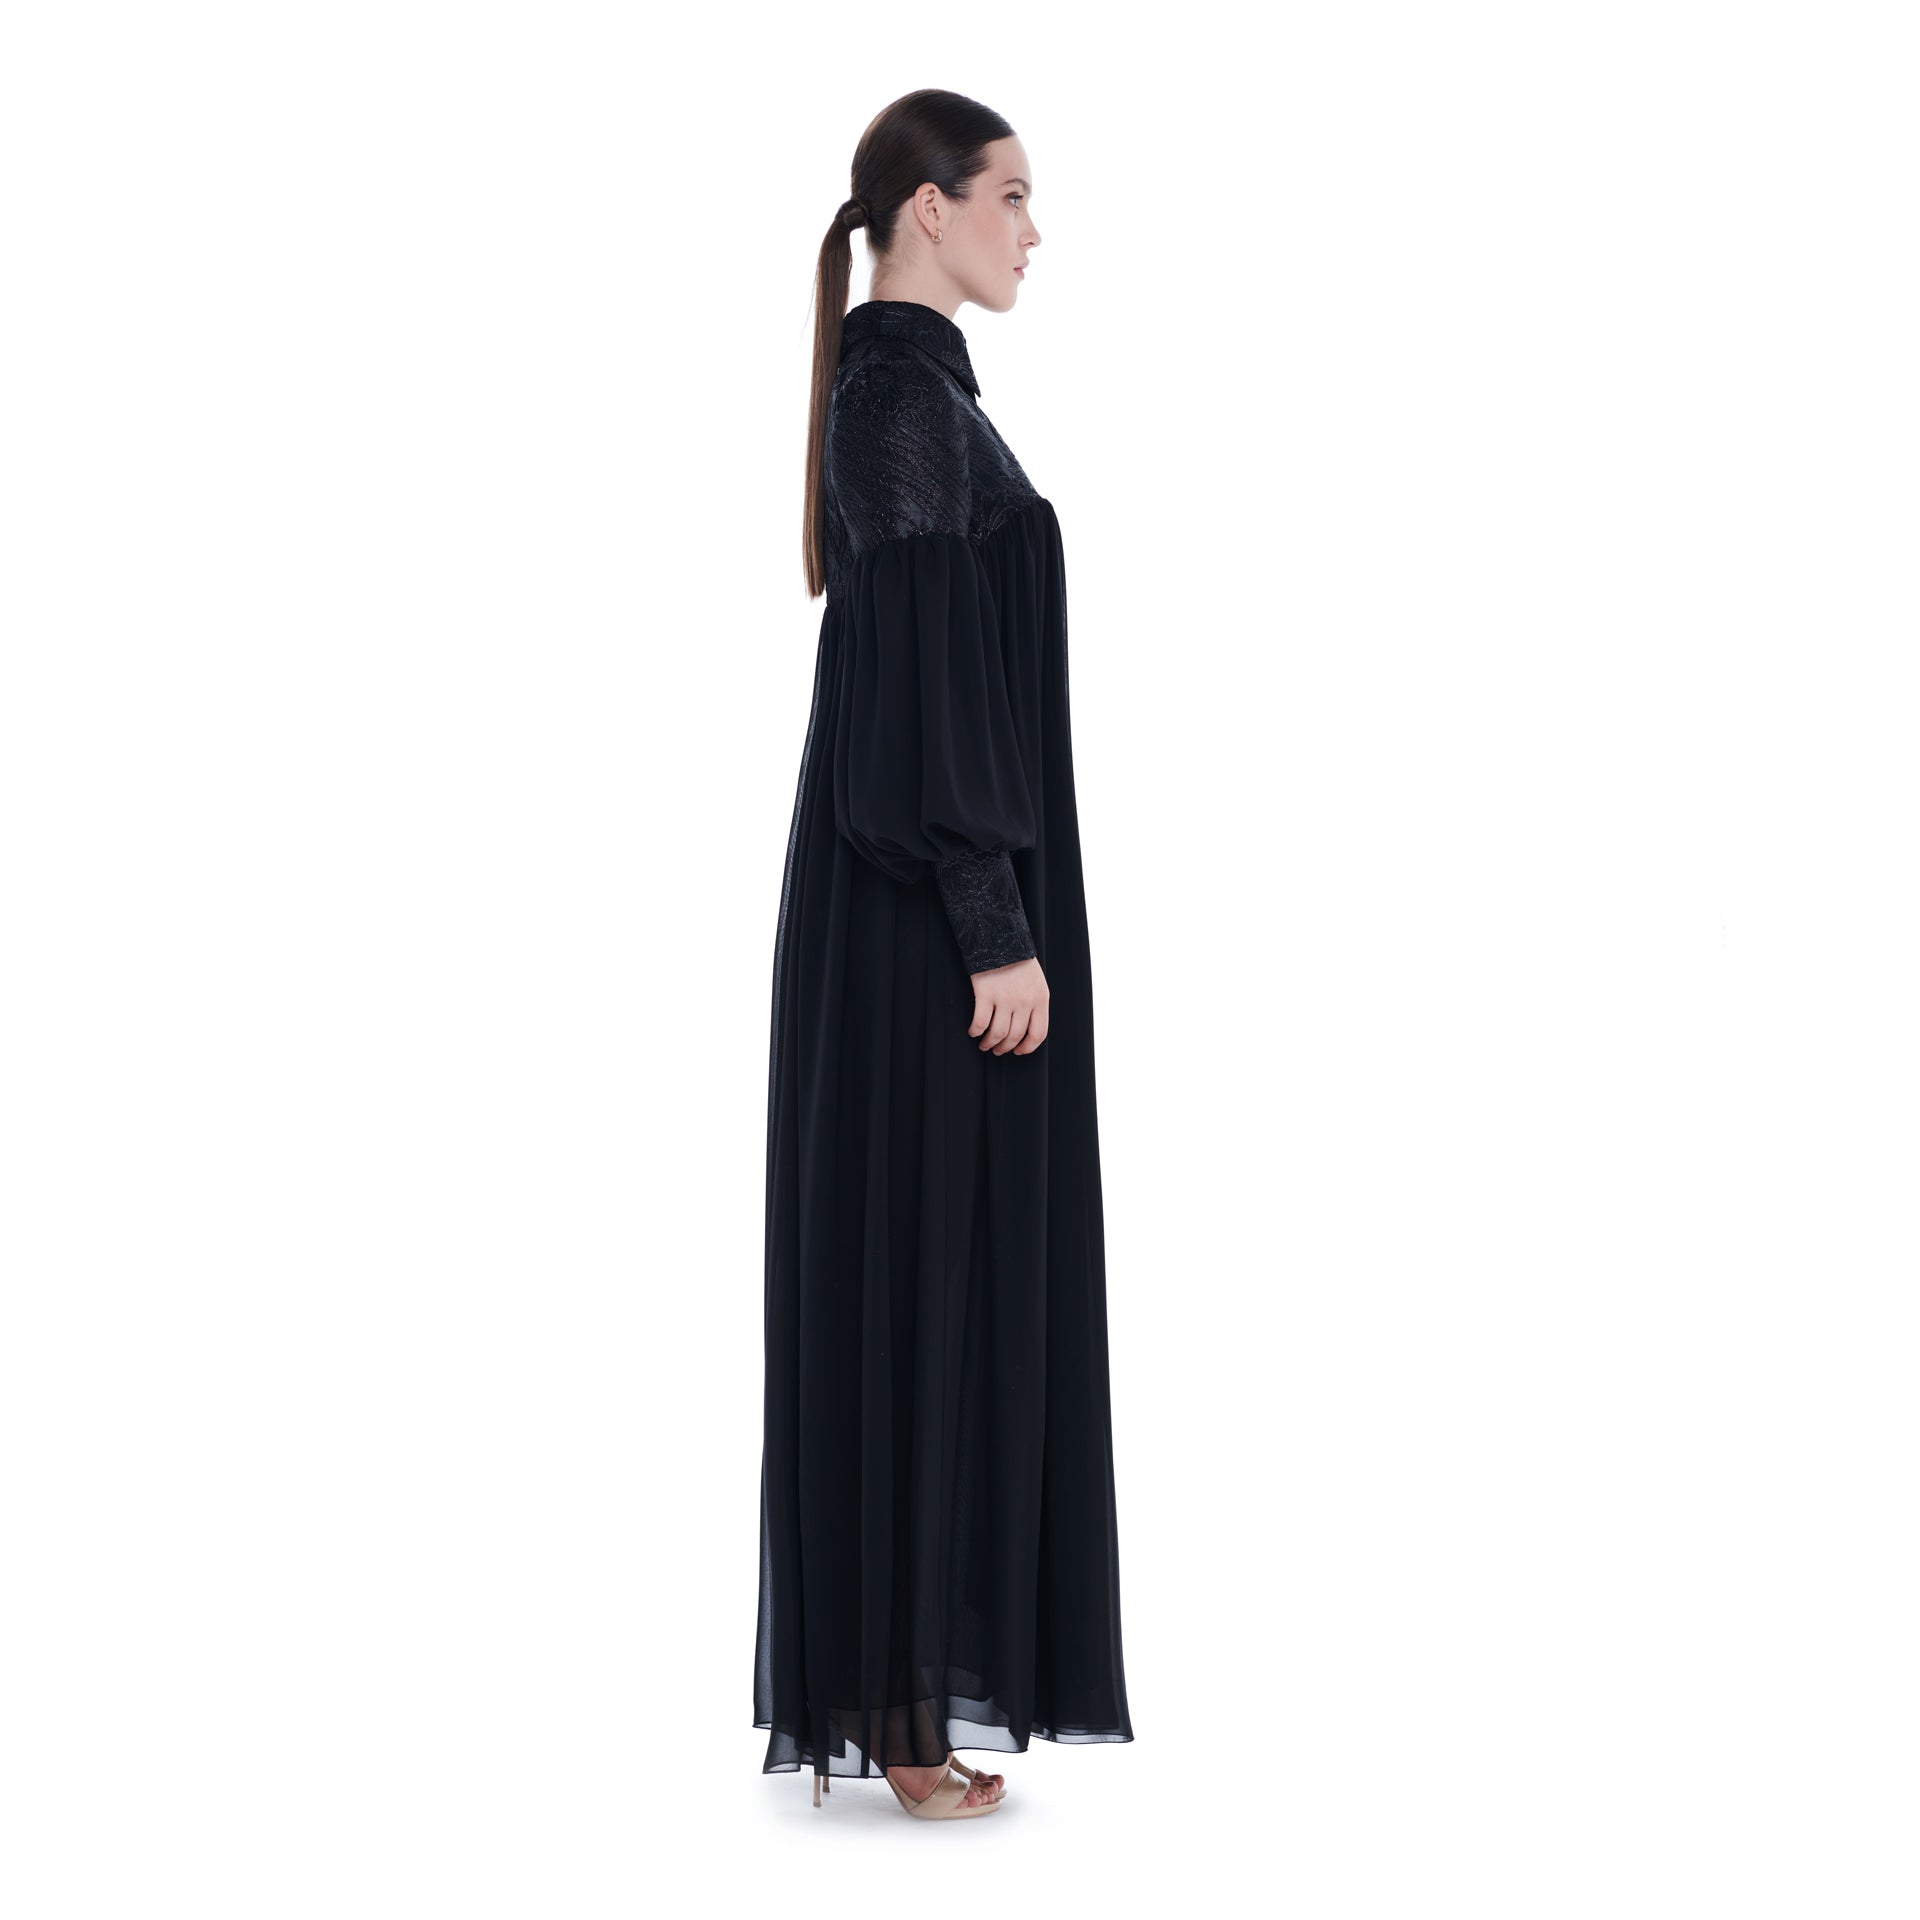 Black Formal Chiffon Dress From Miha